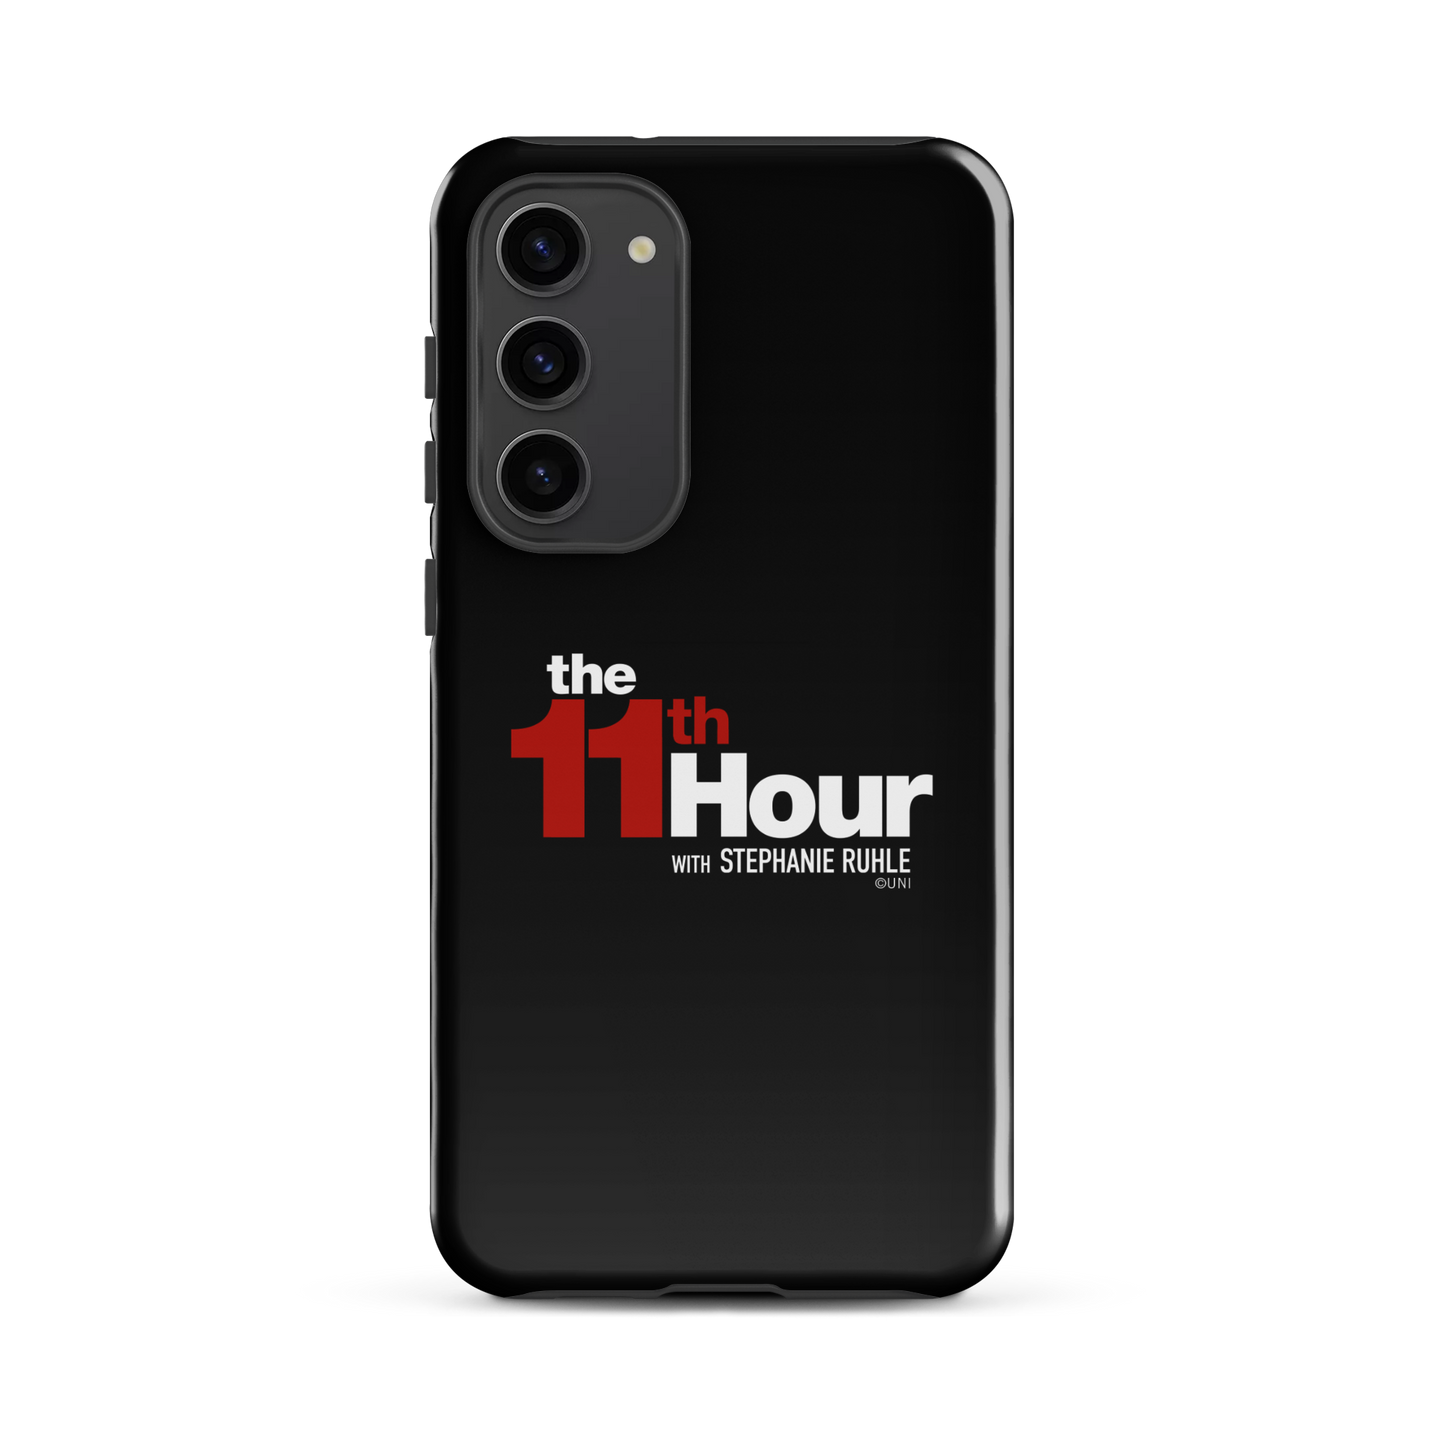 The 11th Hour with Stephanie Ruhle Logo Tough Phone Case - Samsung